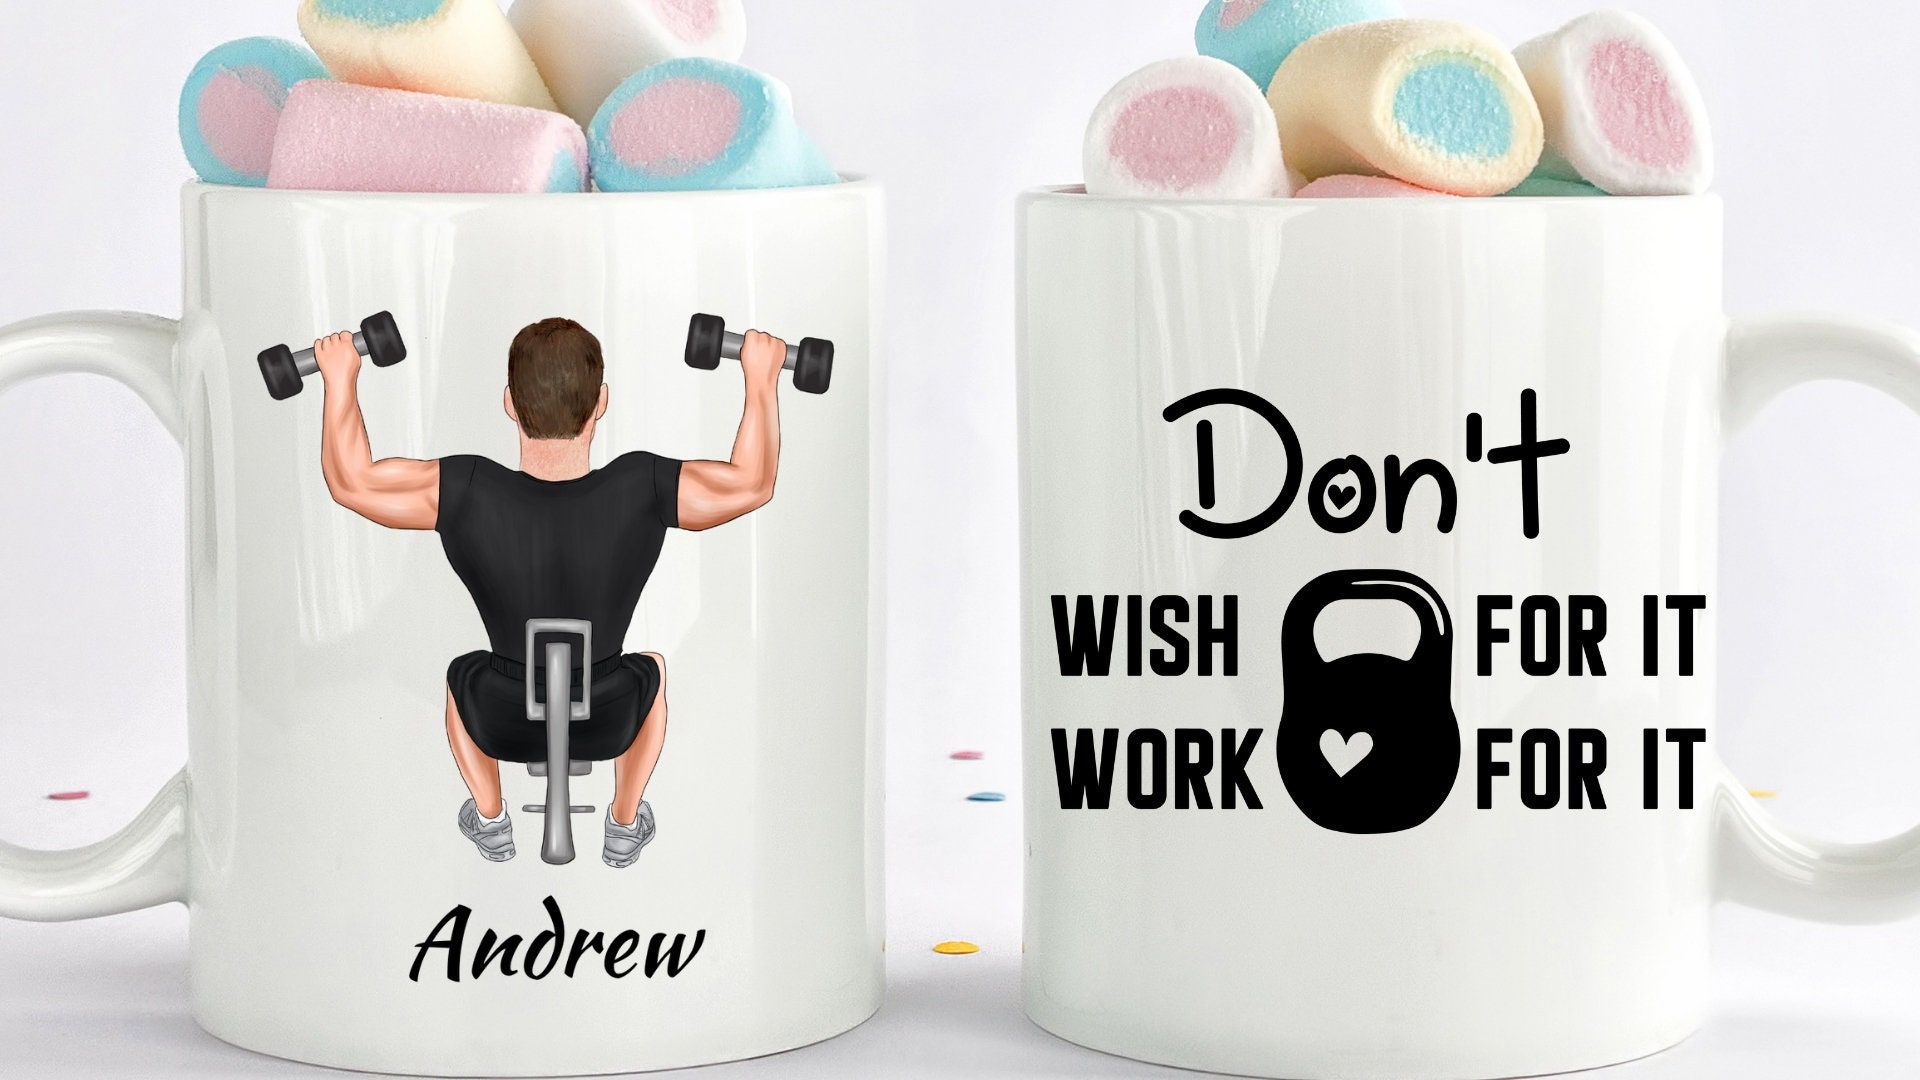 Stronger Than Yesterday - Fitness Coffee Mug - Gym Lover Gift - Workou –  Running Frog Studio